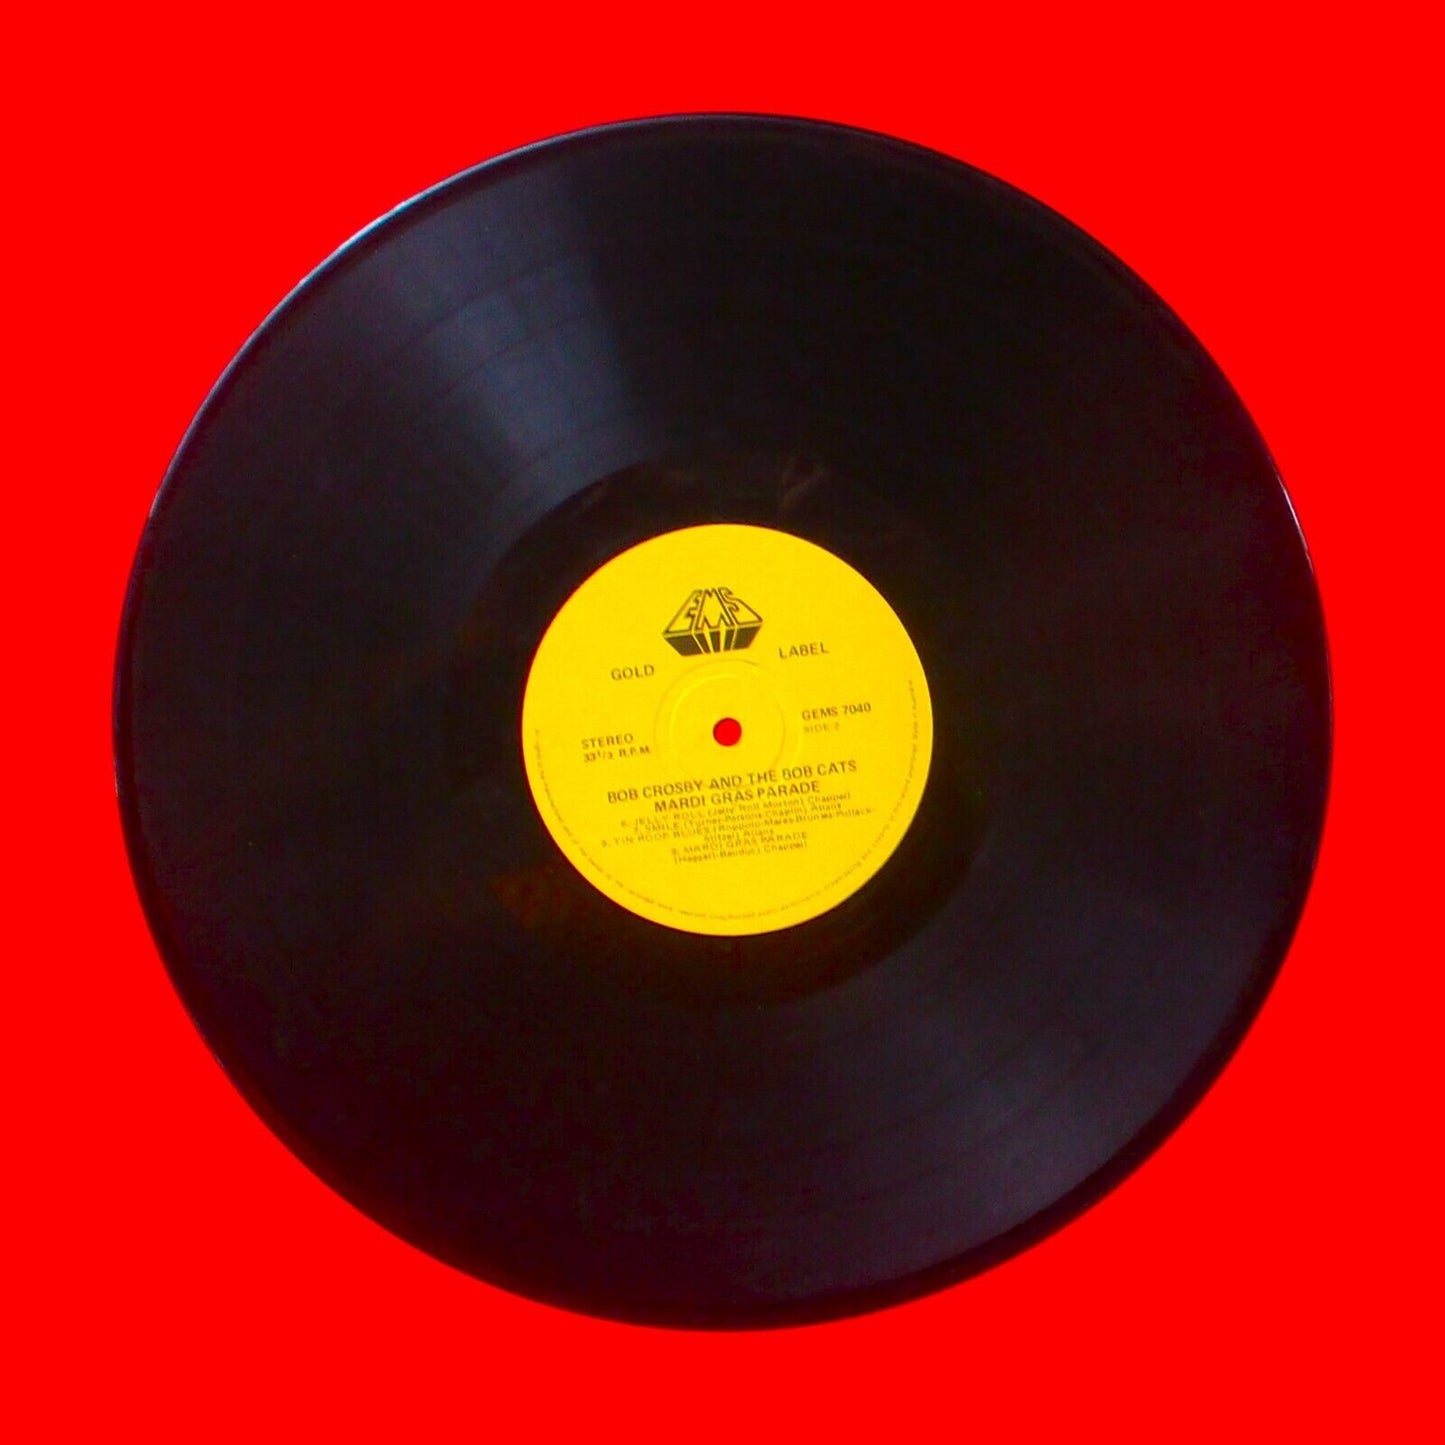 Bob Crosby And The Bob Cats ‎Mardi Gras Parade Vinyl LP Jazz